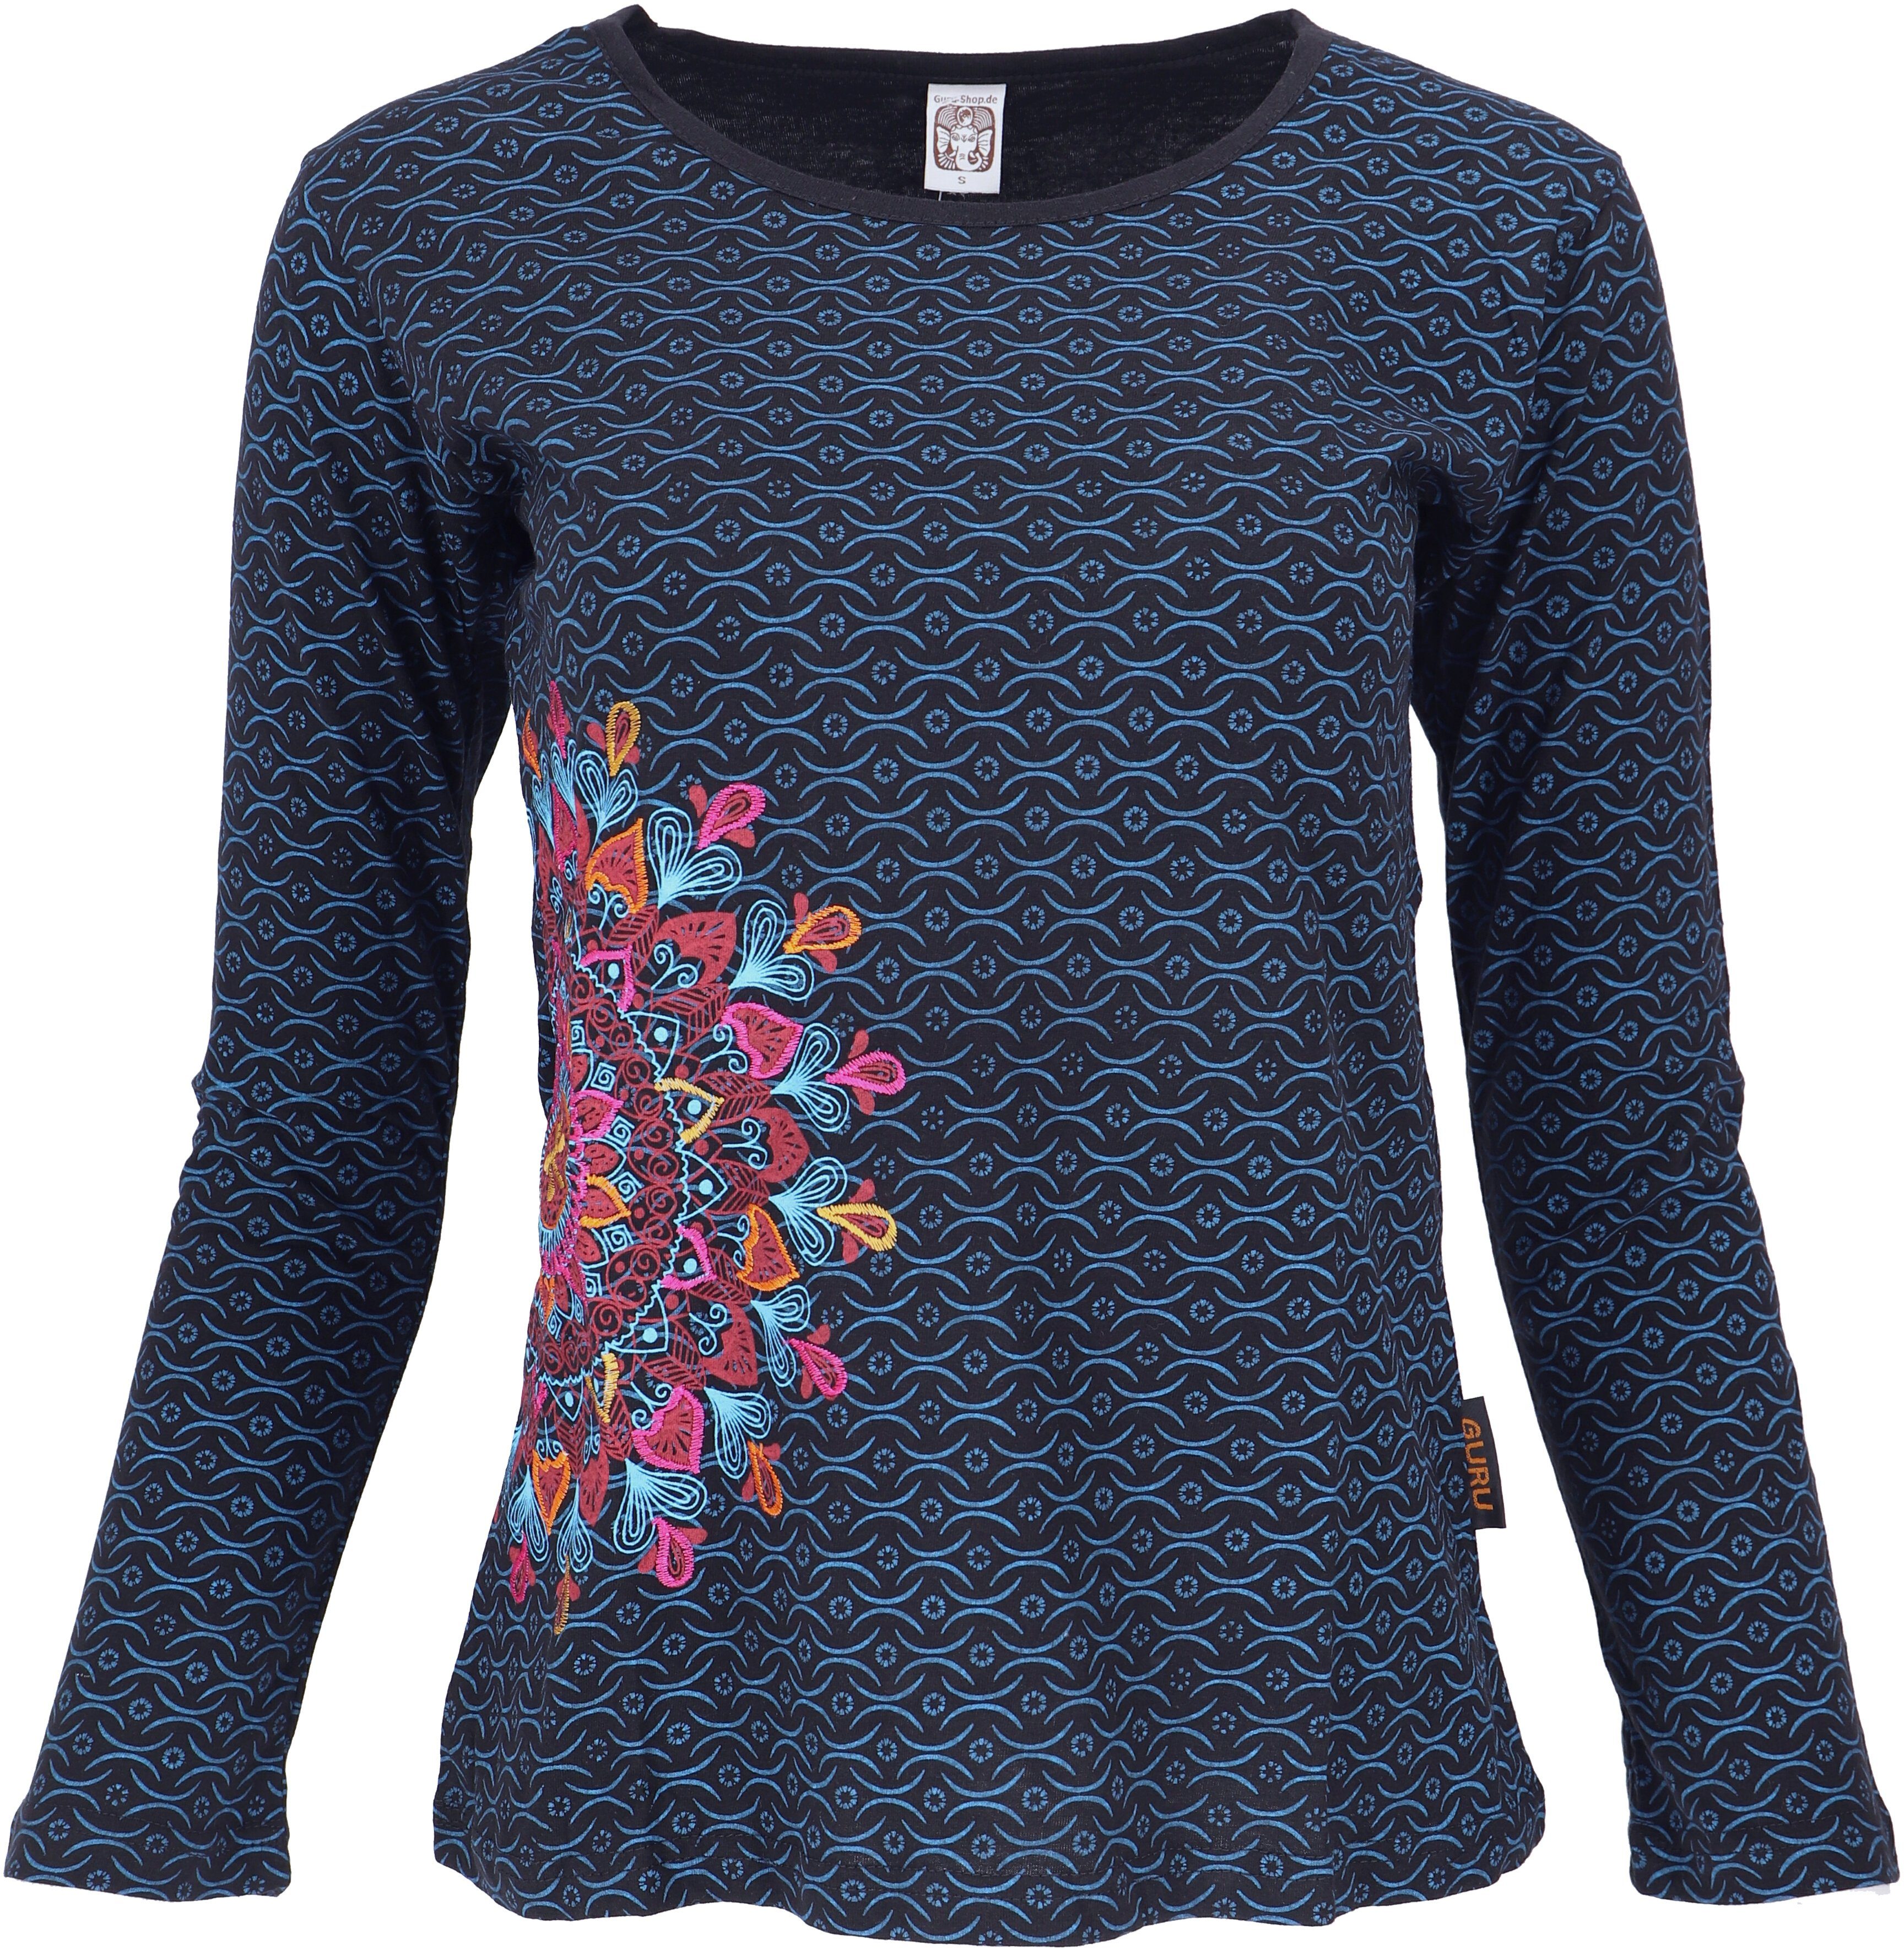 Guru-Shop Longsleeve Besticktes Langarmshirt Boho chic Retro -.. alternative Bekleidung schwarz/blau | Shirts